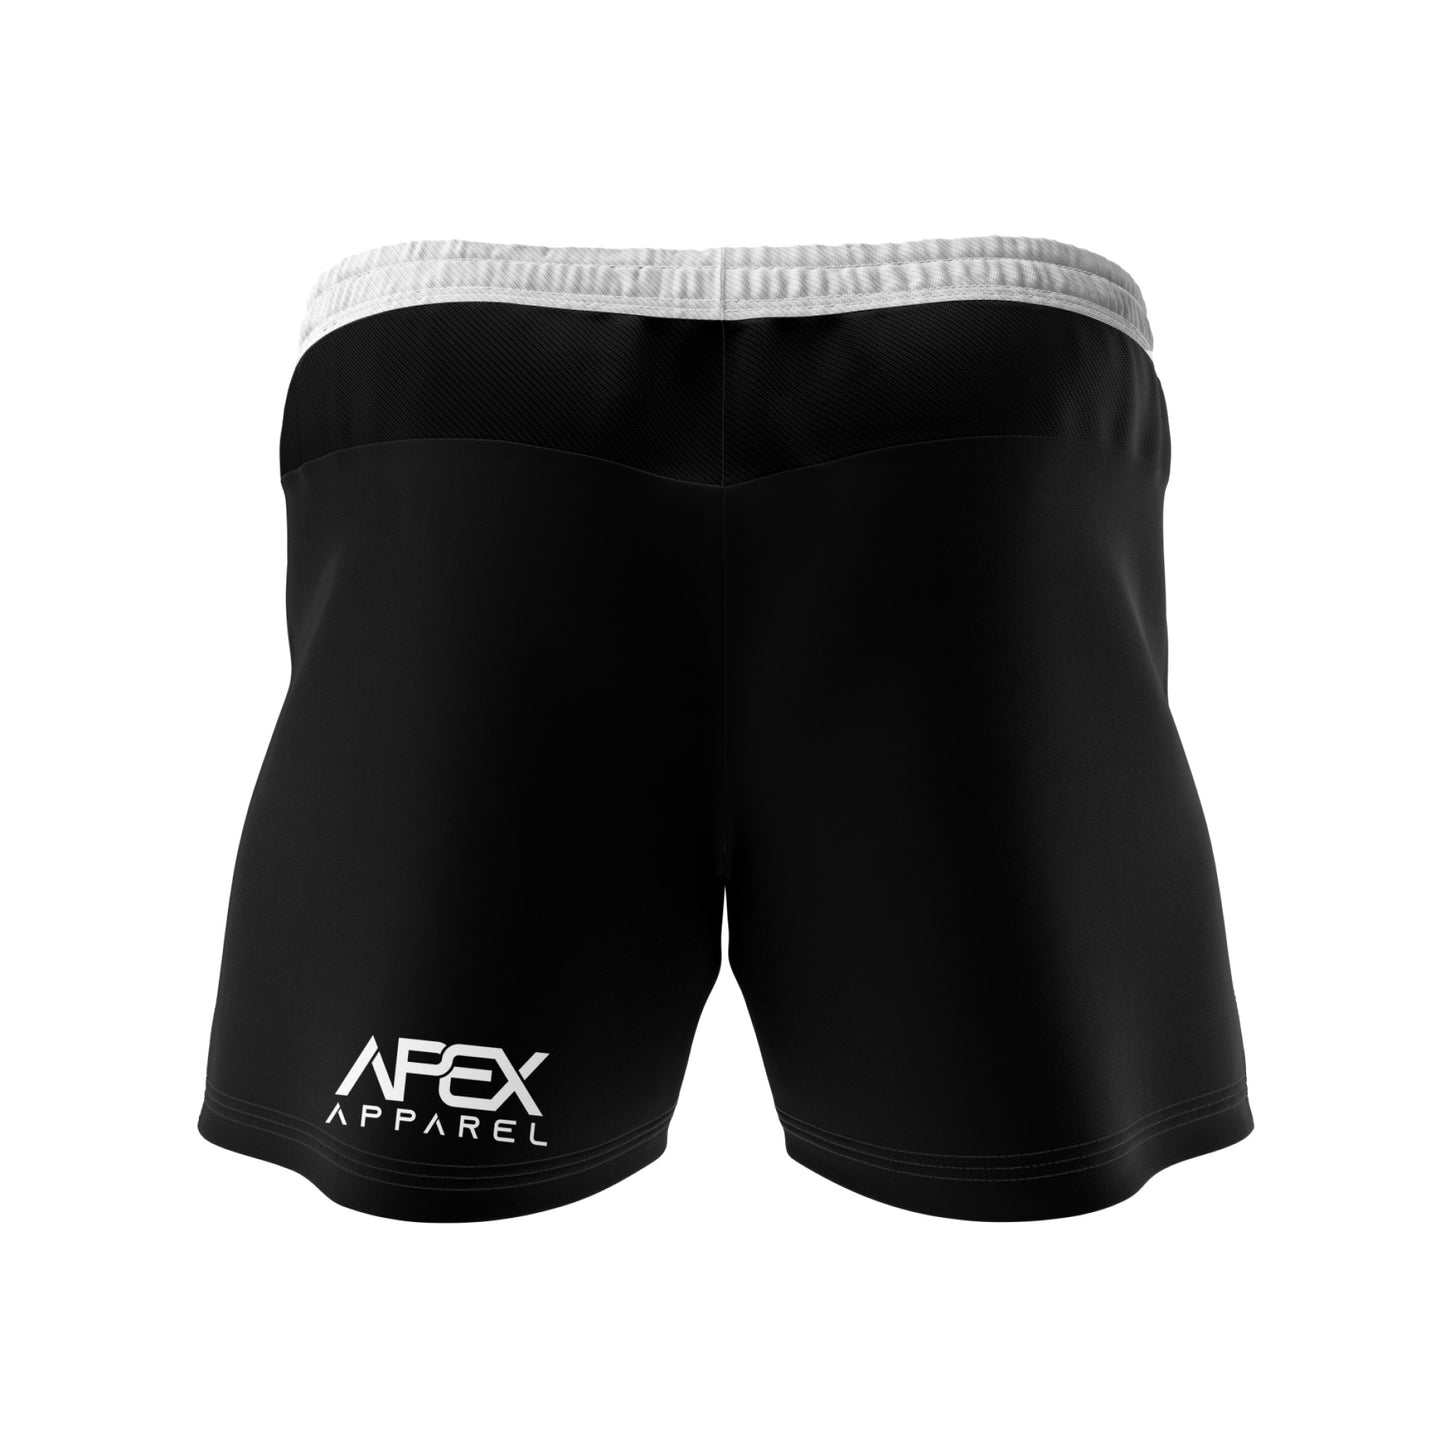 Custom Soccer Shorts - Phoenix